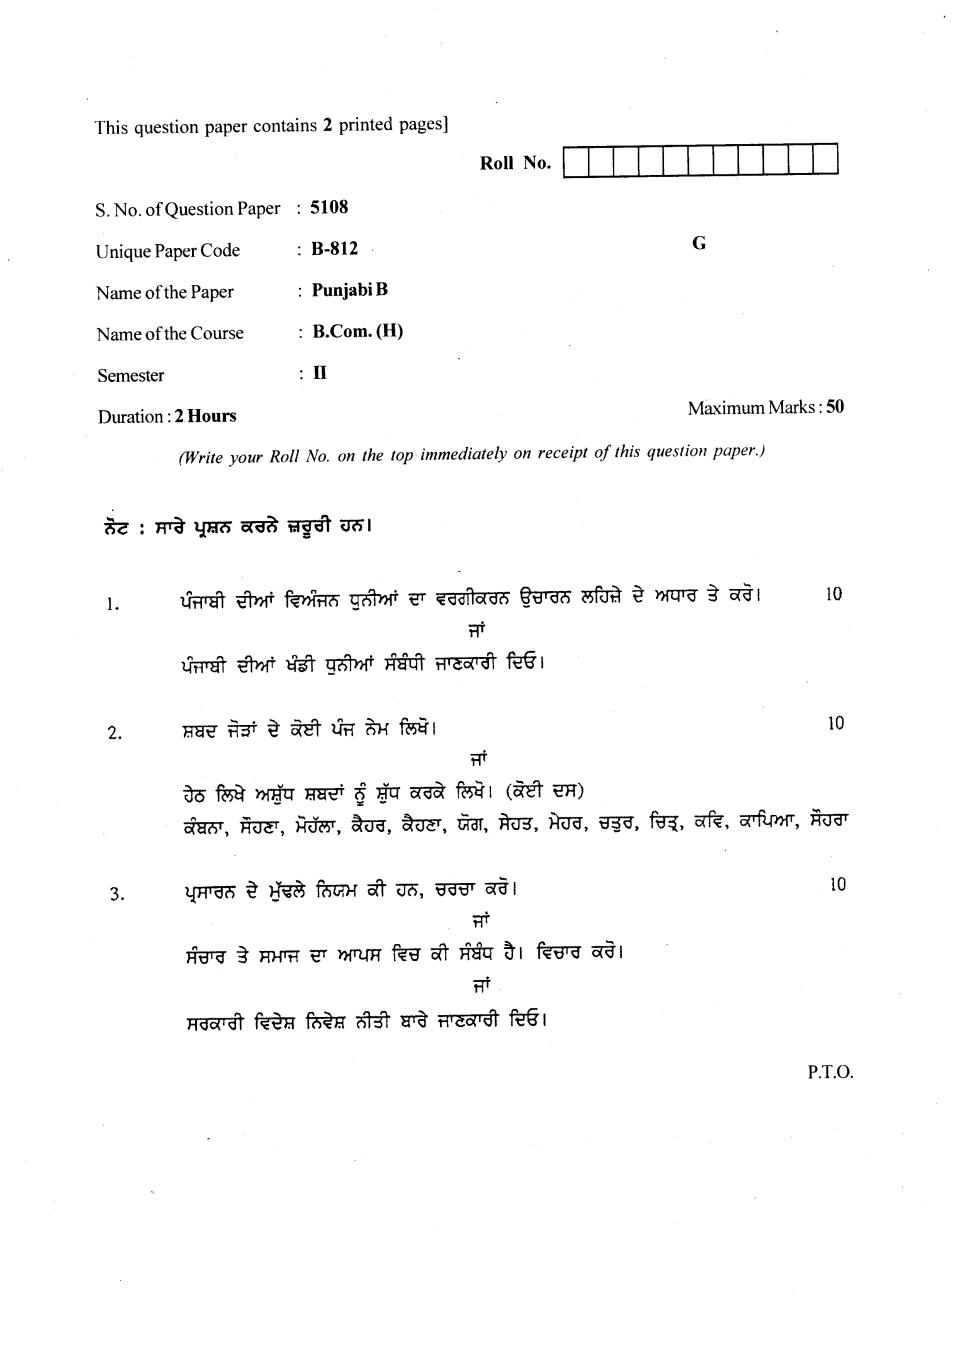 DU SOL Question Paper 2018 B.Com (Hons.) Punjabi - B - Page 1